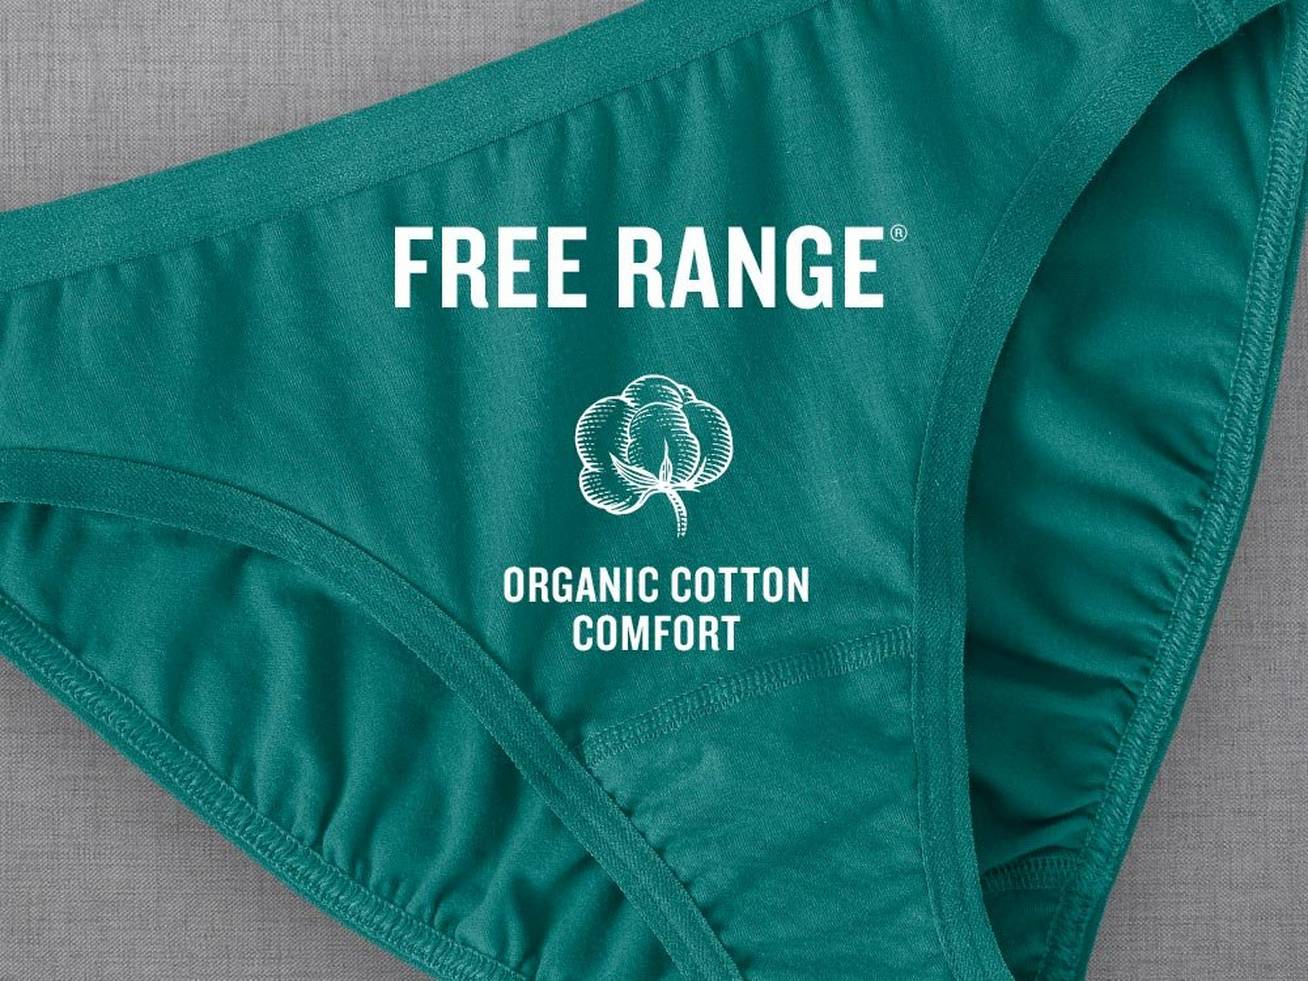 Free Range organic cotton comfort underwear